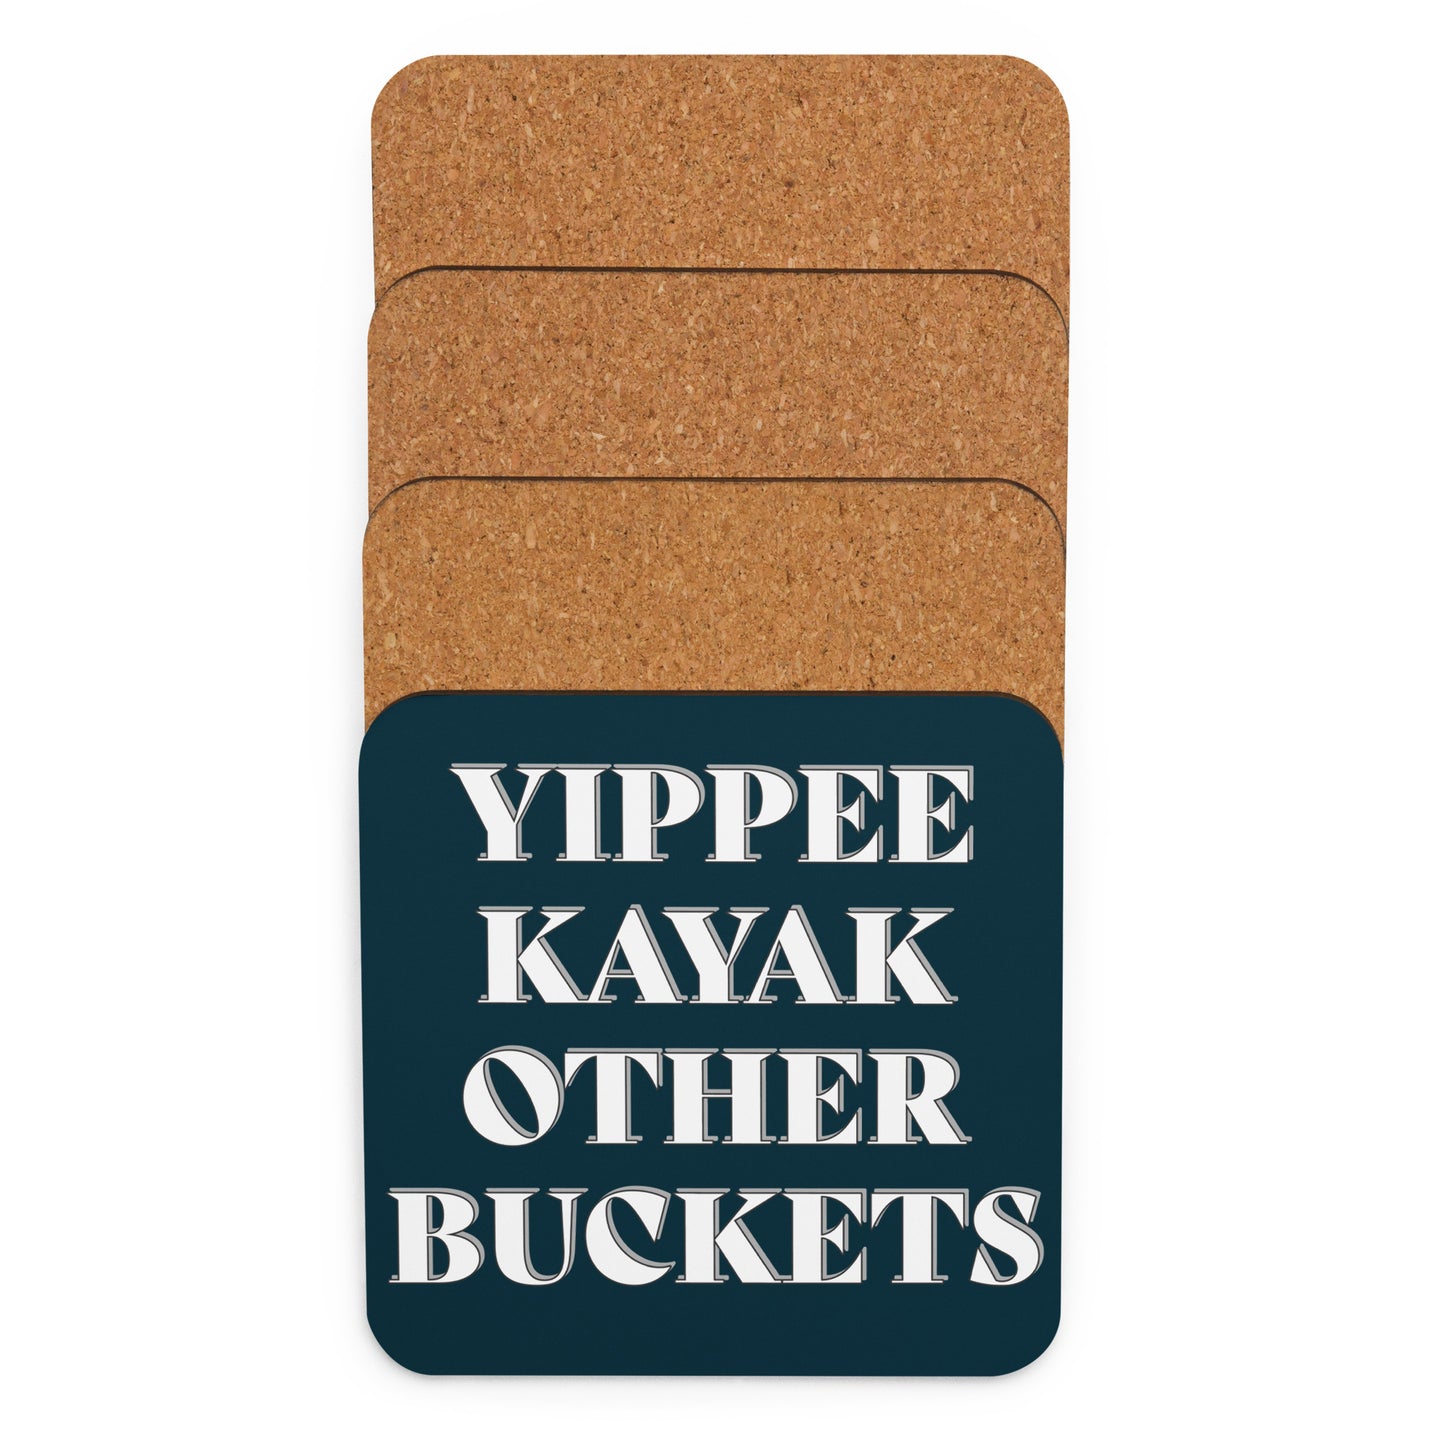 Yippee Kayak Other Buckets Cork-back coaster